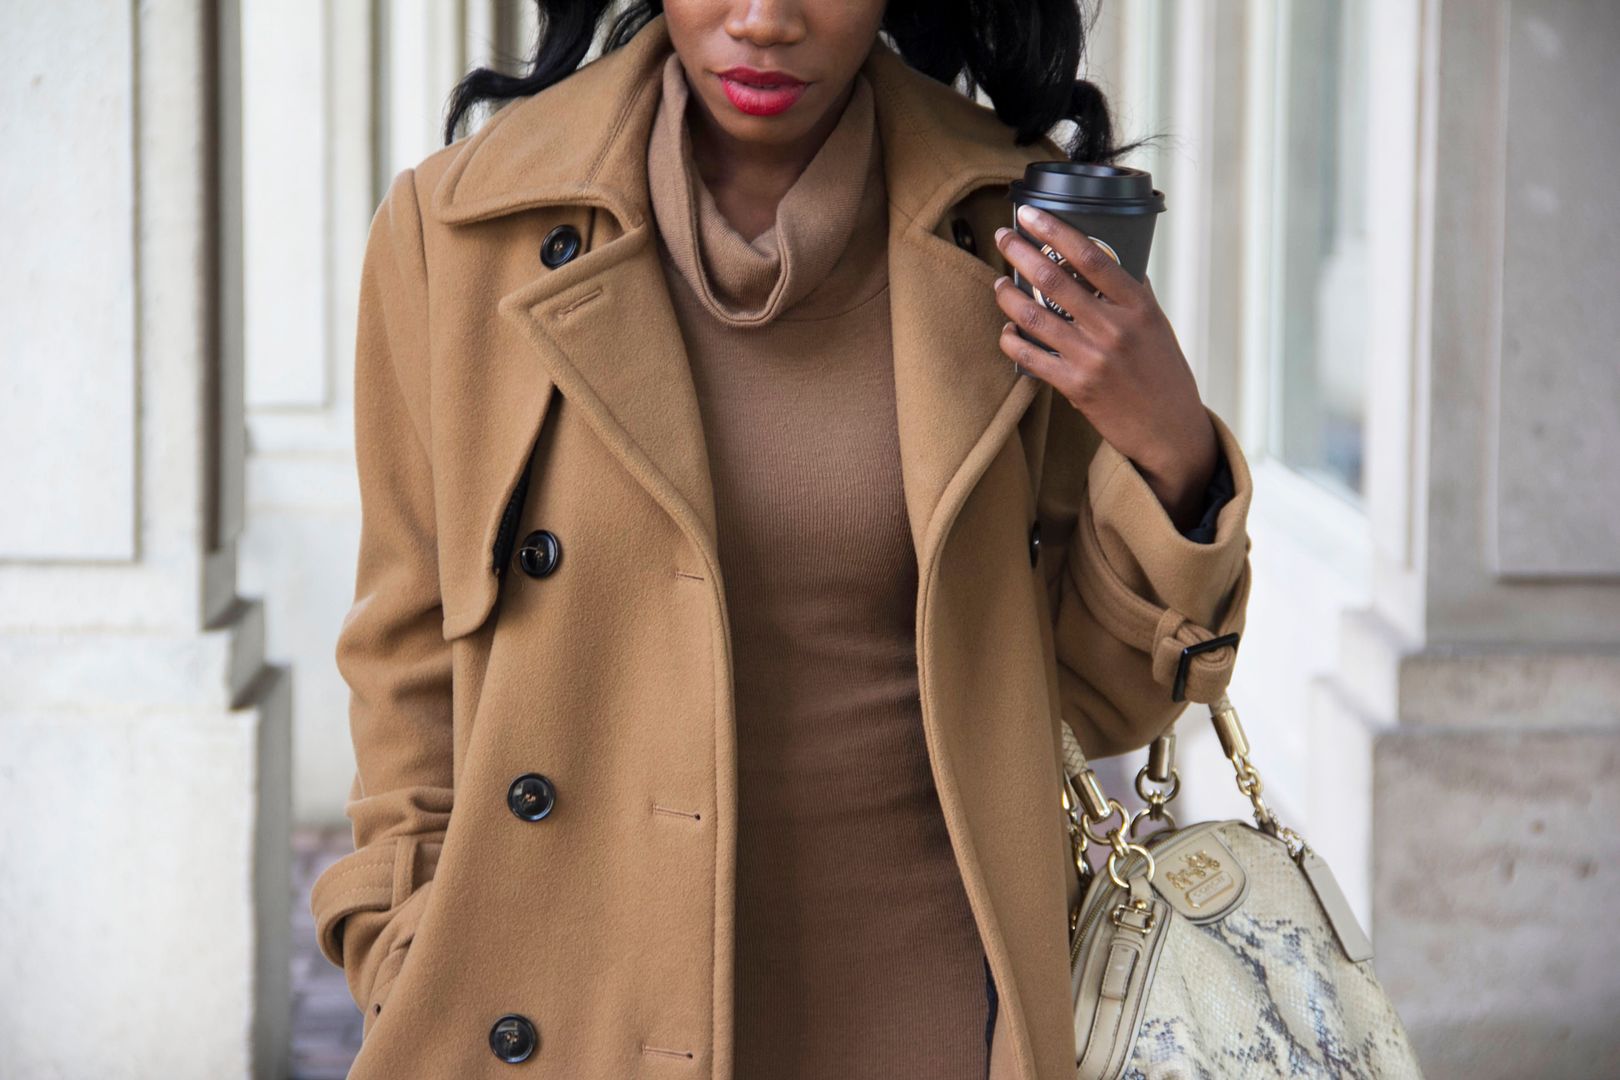 Camel Coat and Dress, Toronto blogger, Coach bag, Black style blogger